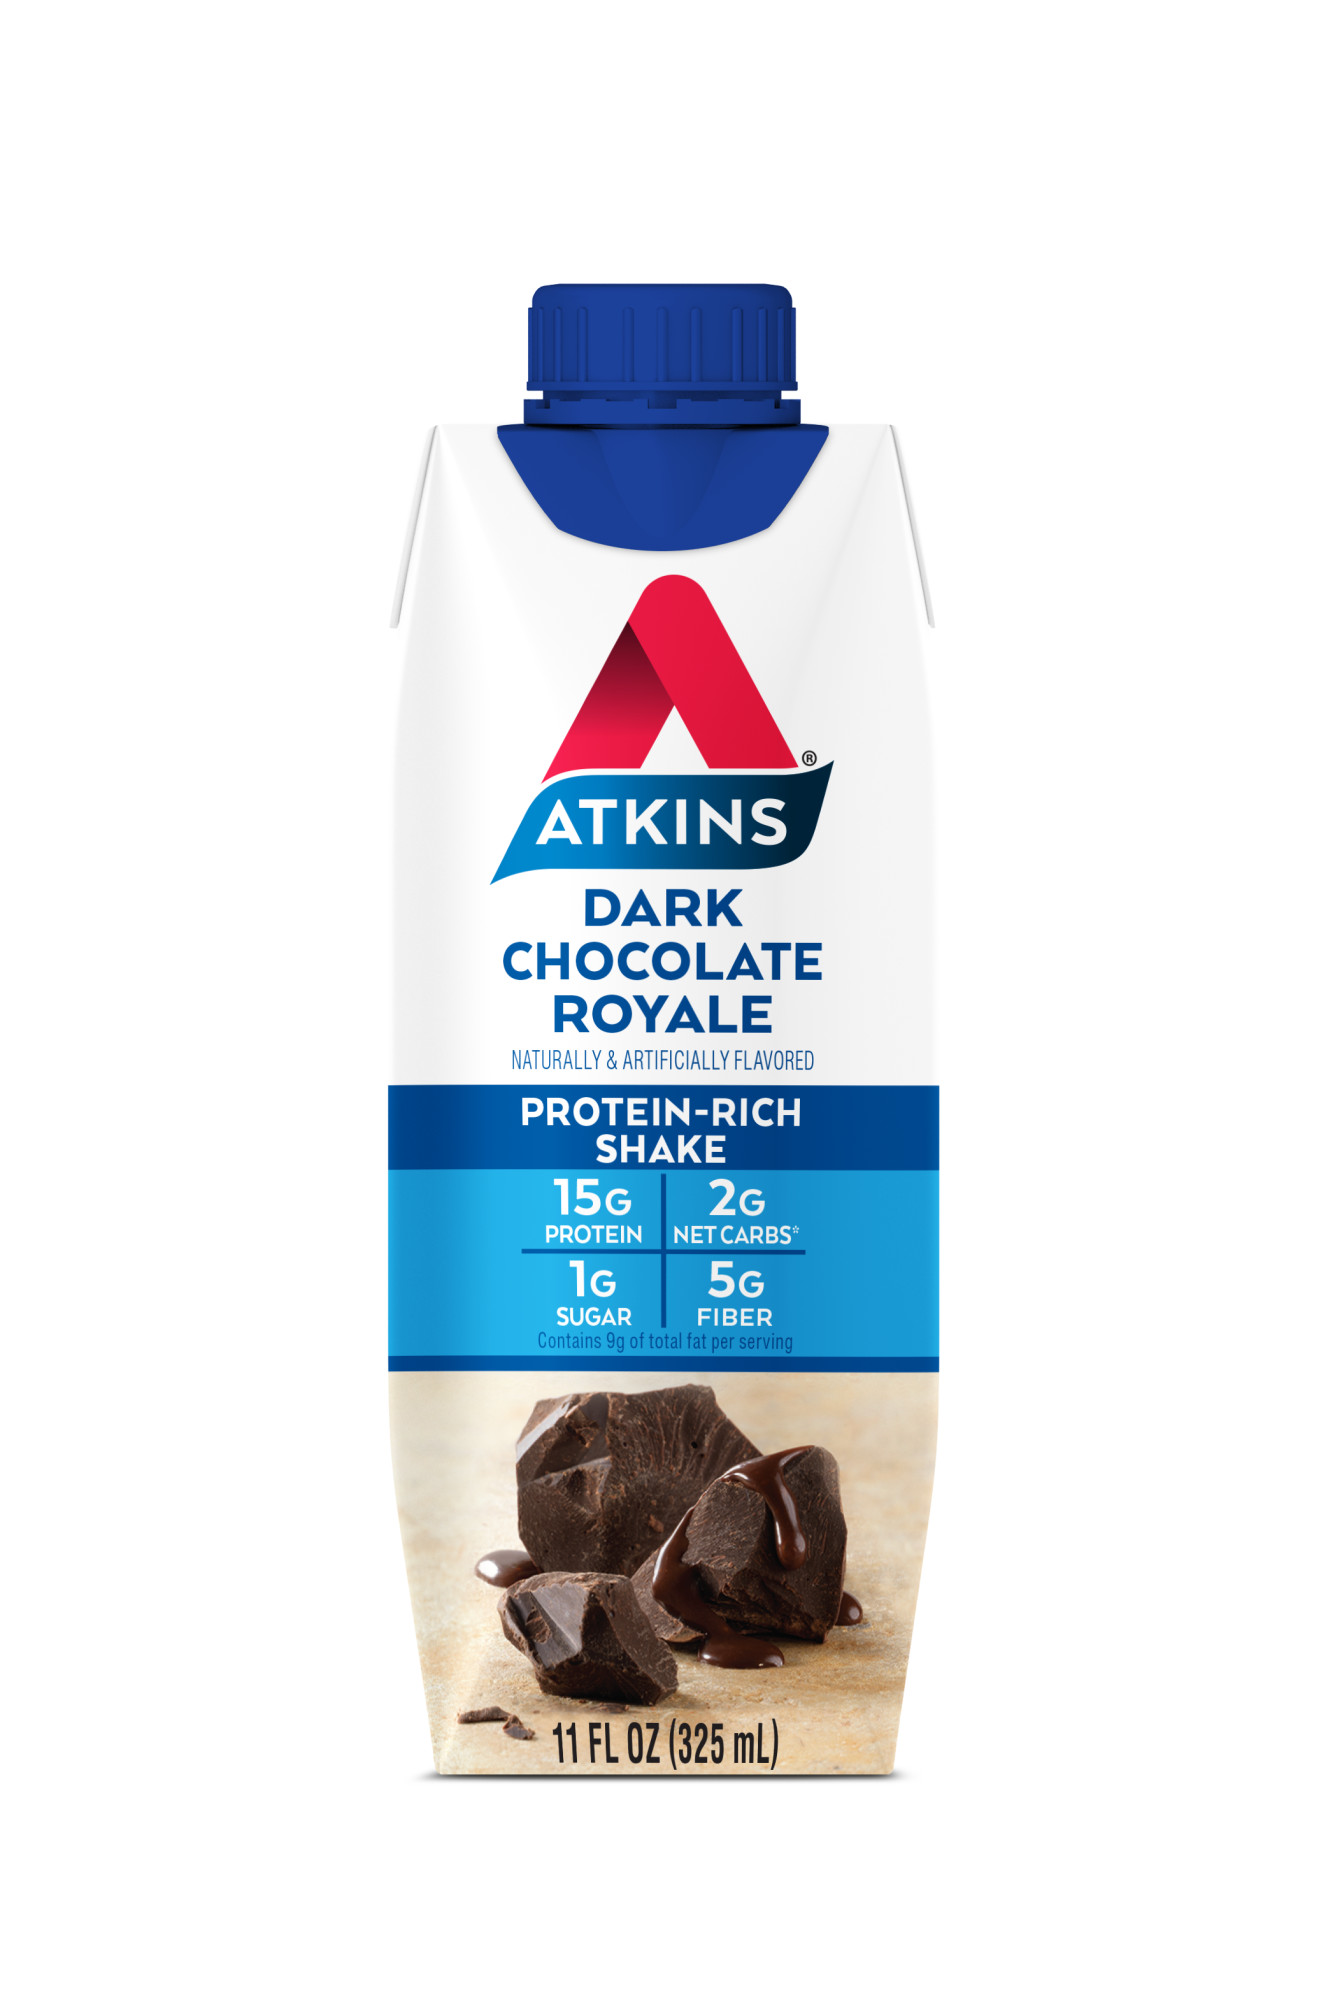 Atkins Dark Chocolate Royale Protein Shake, High Protein, Low Carb, Keto Friendly, Gluten Free, 11fl oz, 4 Ct - image 3 of 9